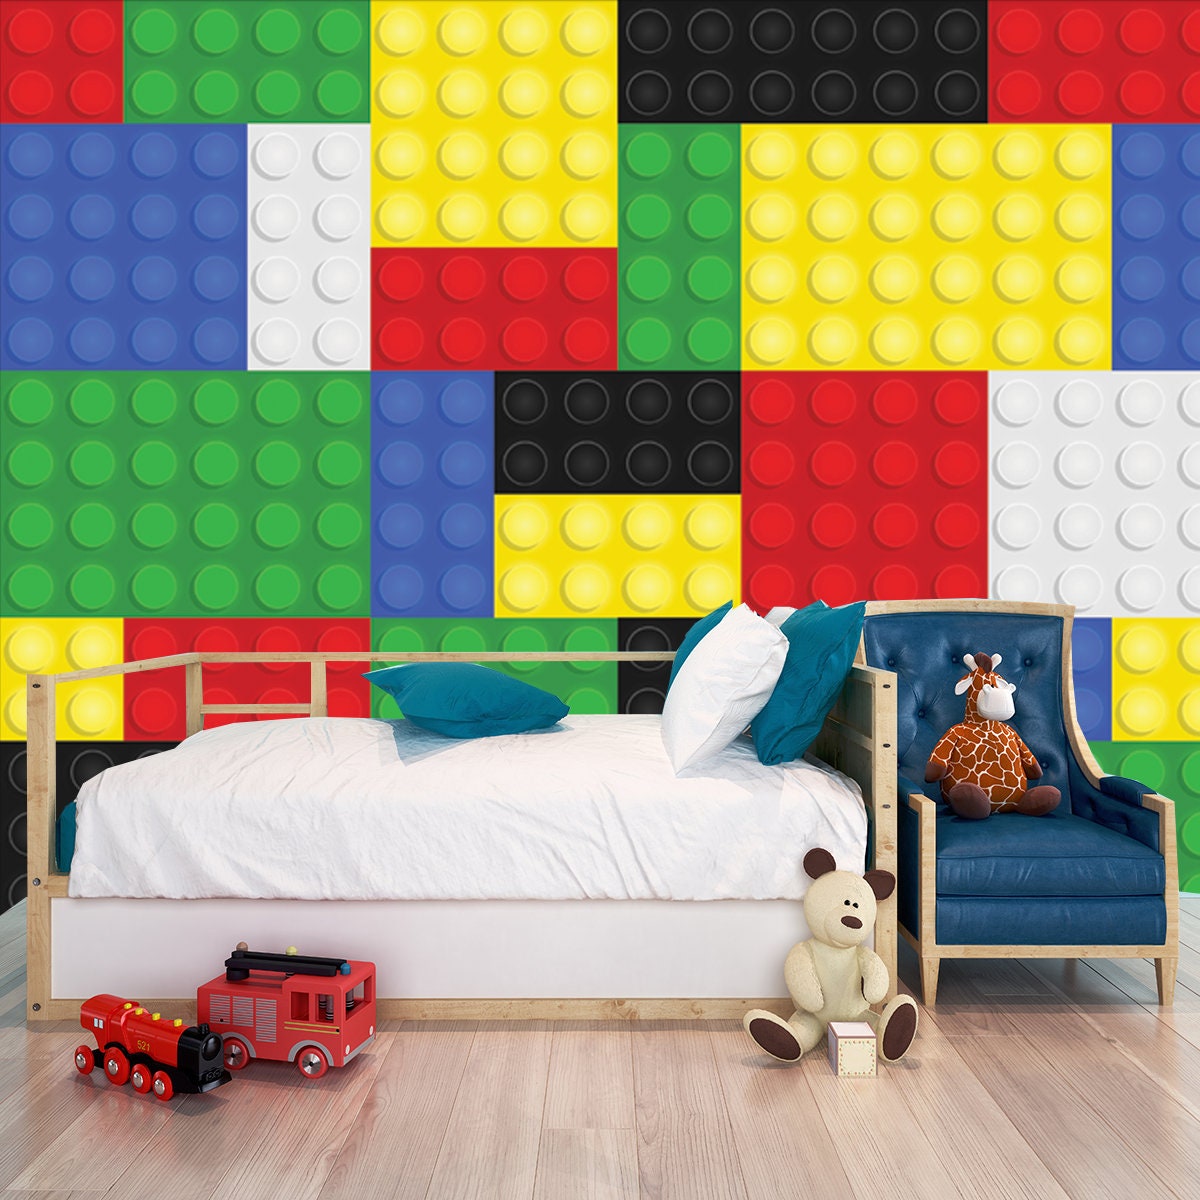 Plastic Toy Building Blocks Background Wallpaper Boys Bedroom Mural